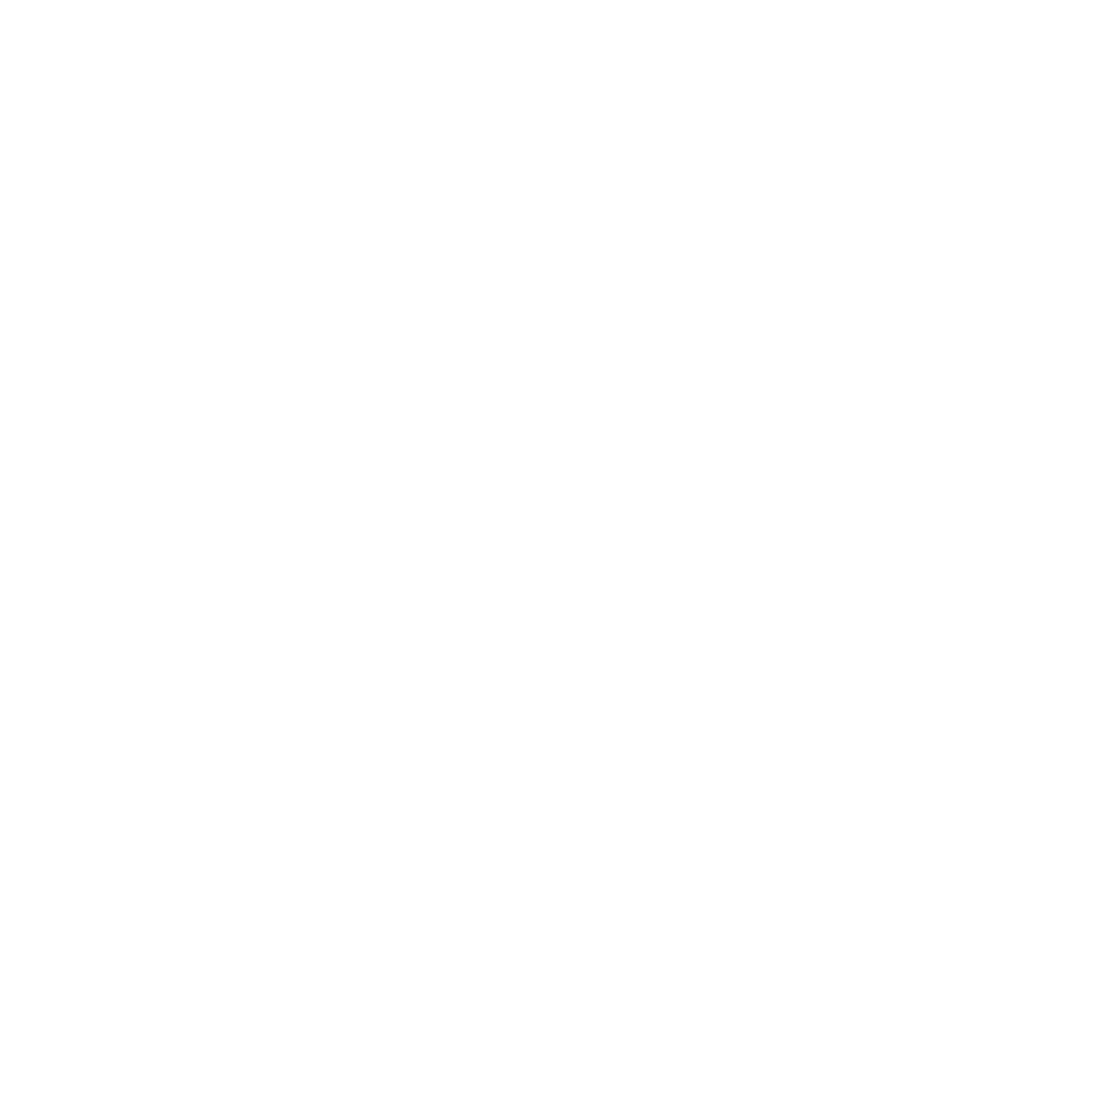 Northern Heritage Builders